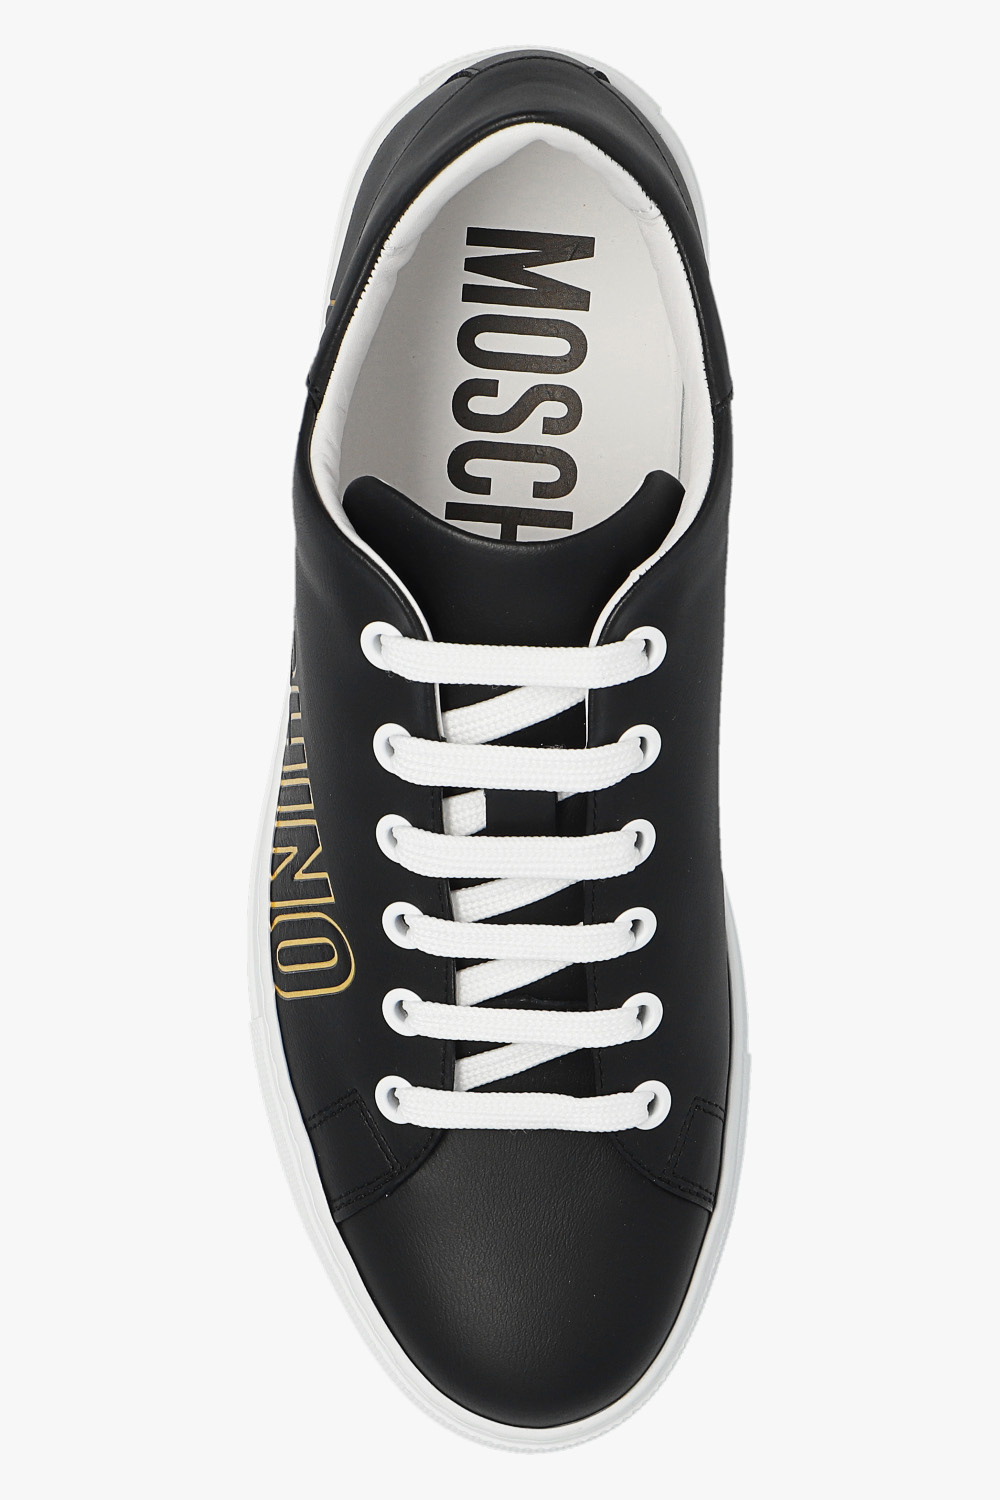 Moschino zapatillas de running Adidas mujer competición talla 33.5